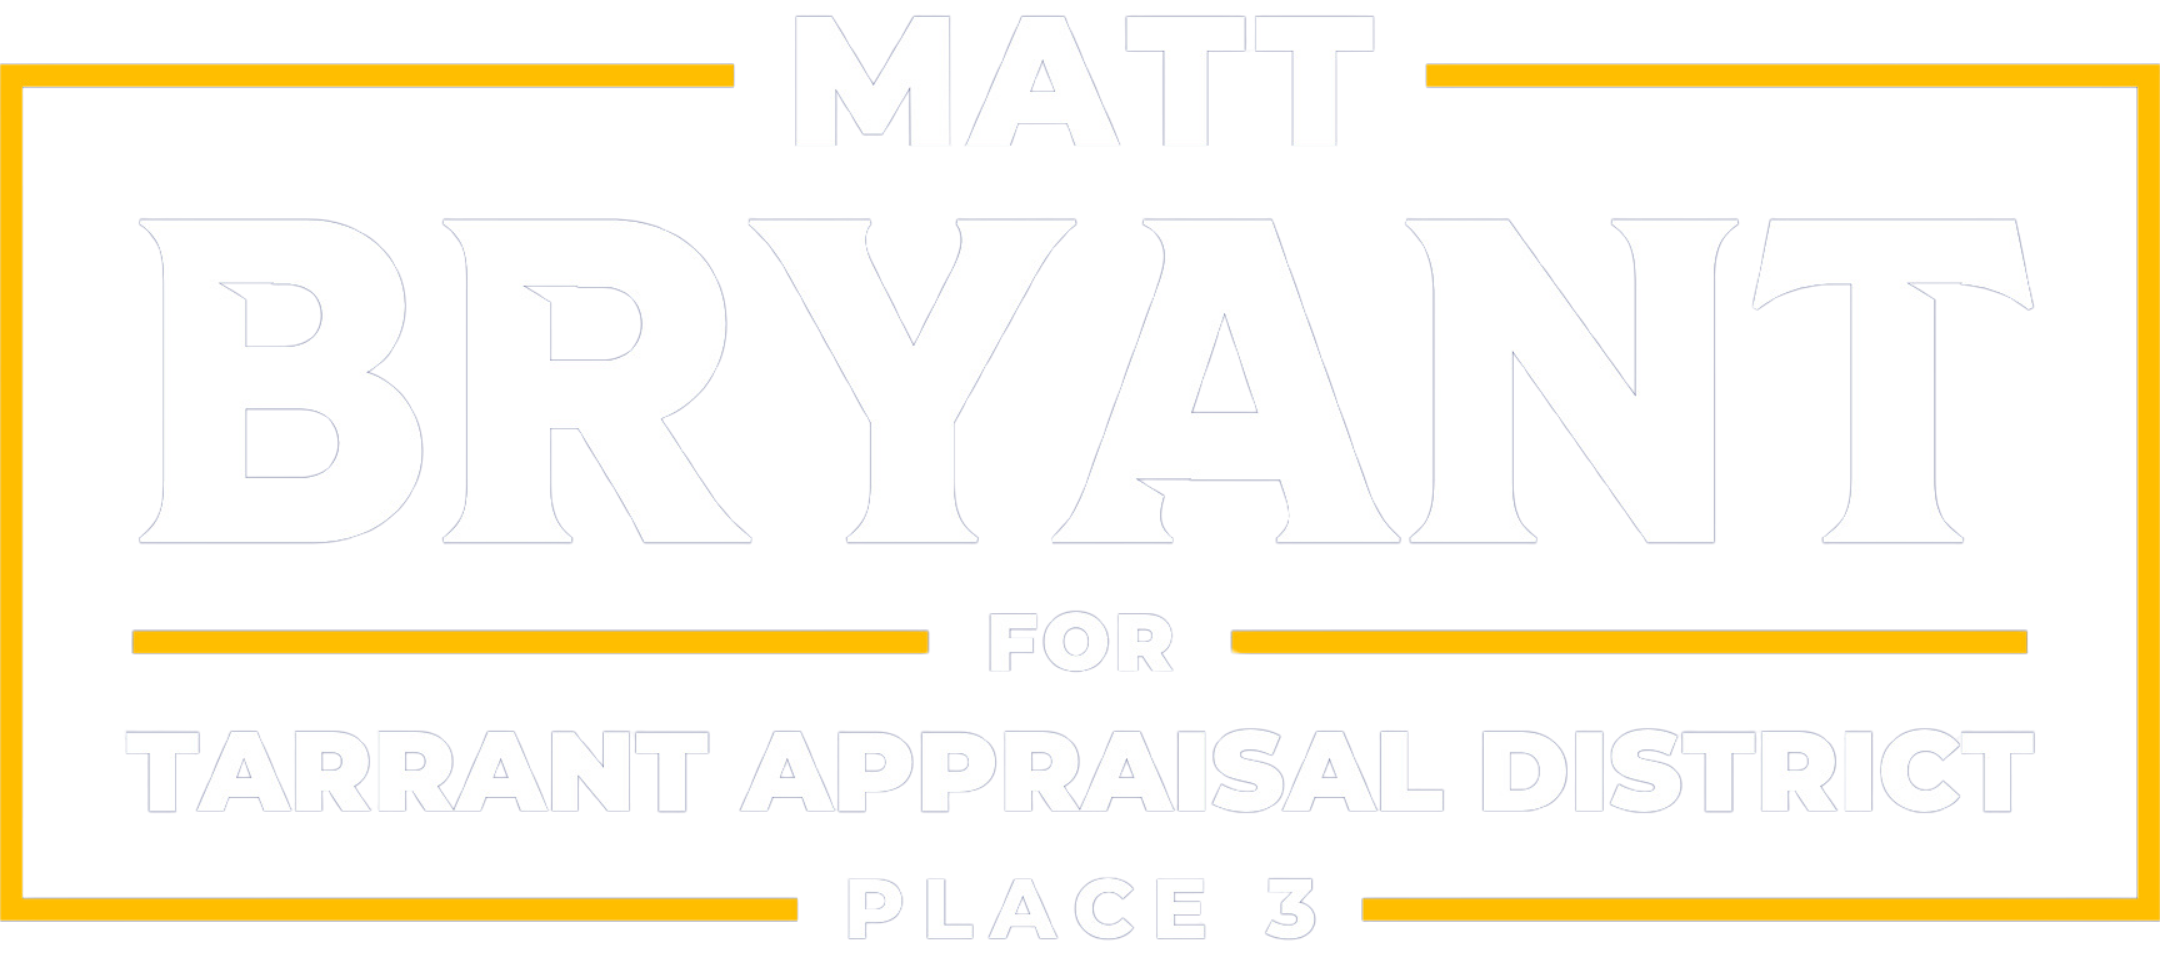 Matt Bryant for Tarrant Appraisal District Board